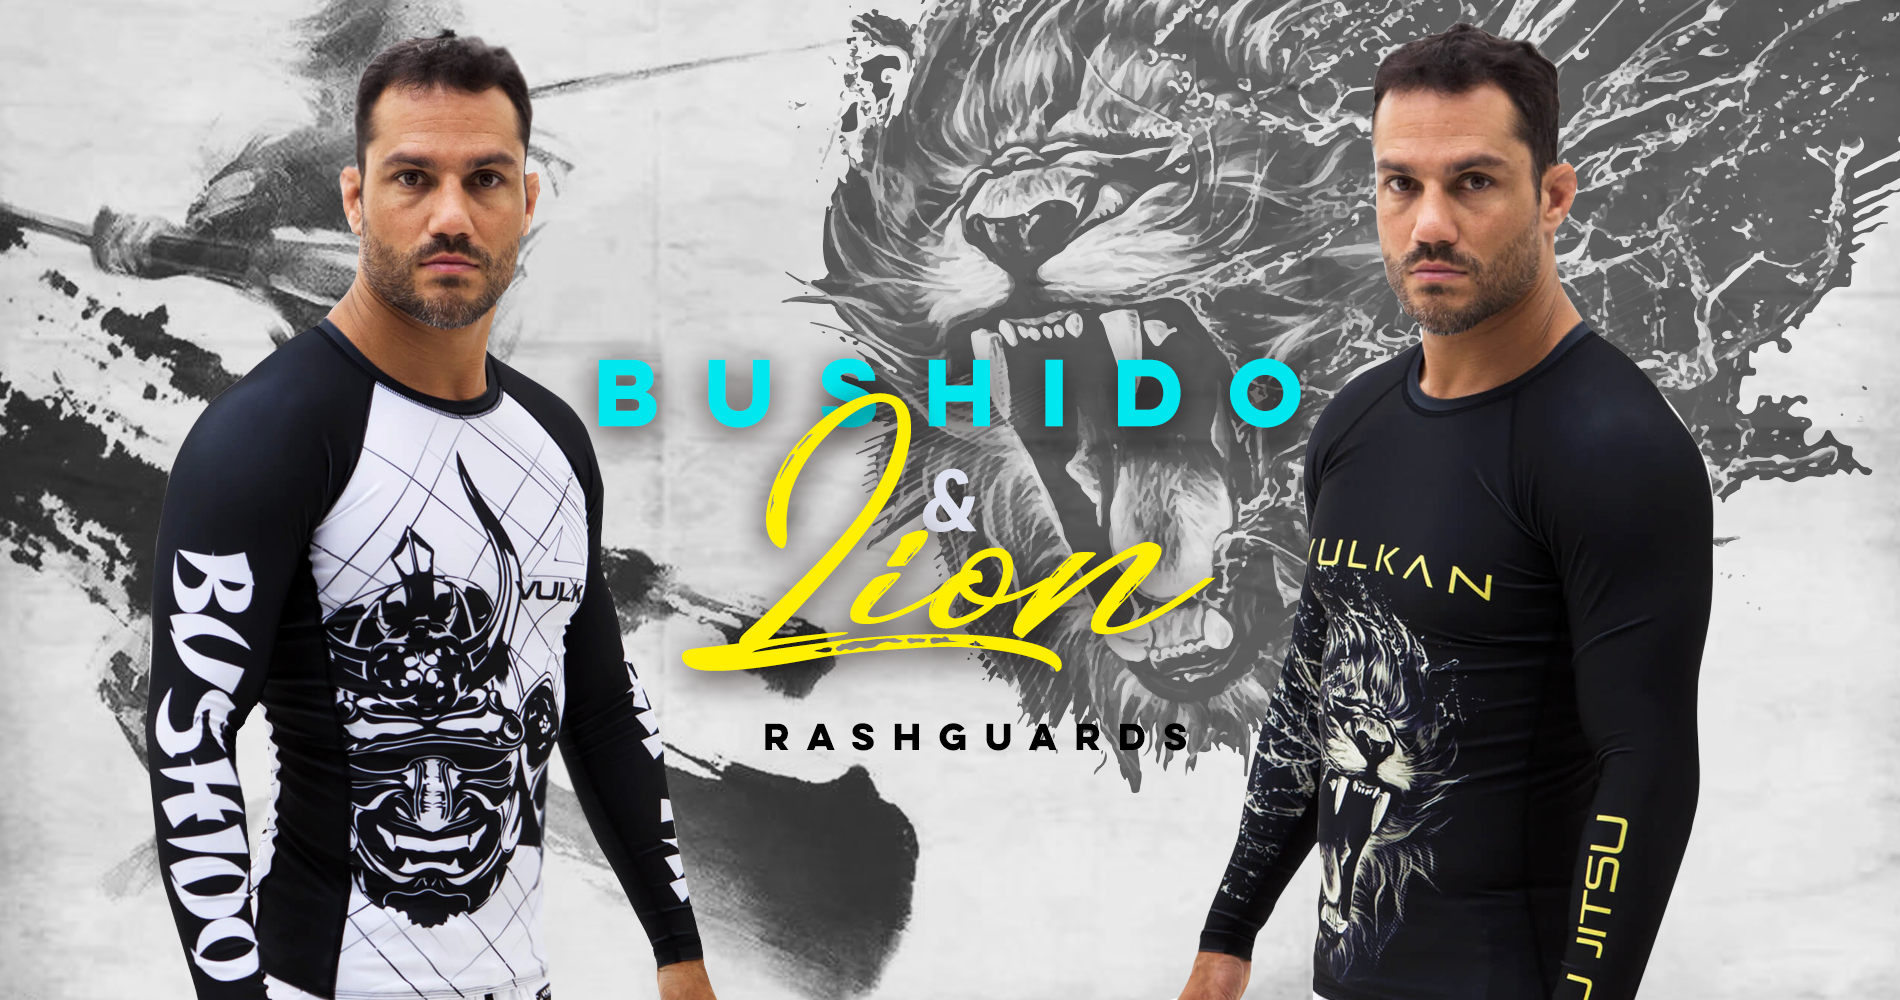 Rashguard Lion and Bushido